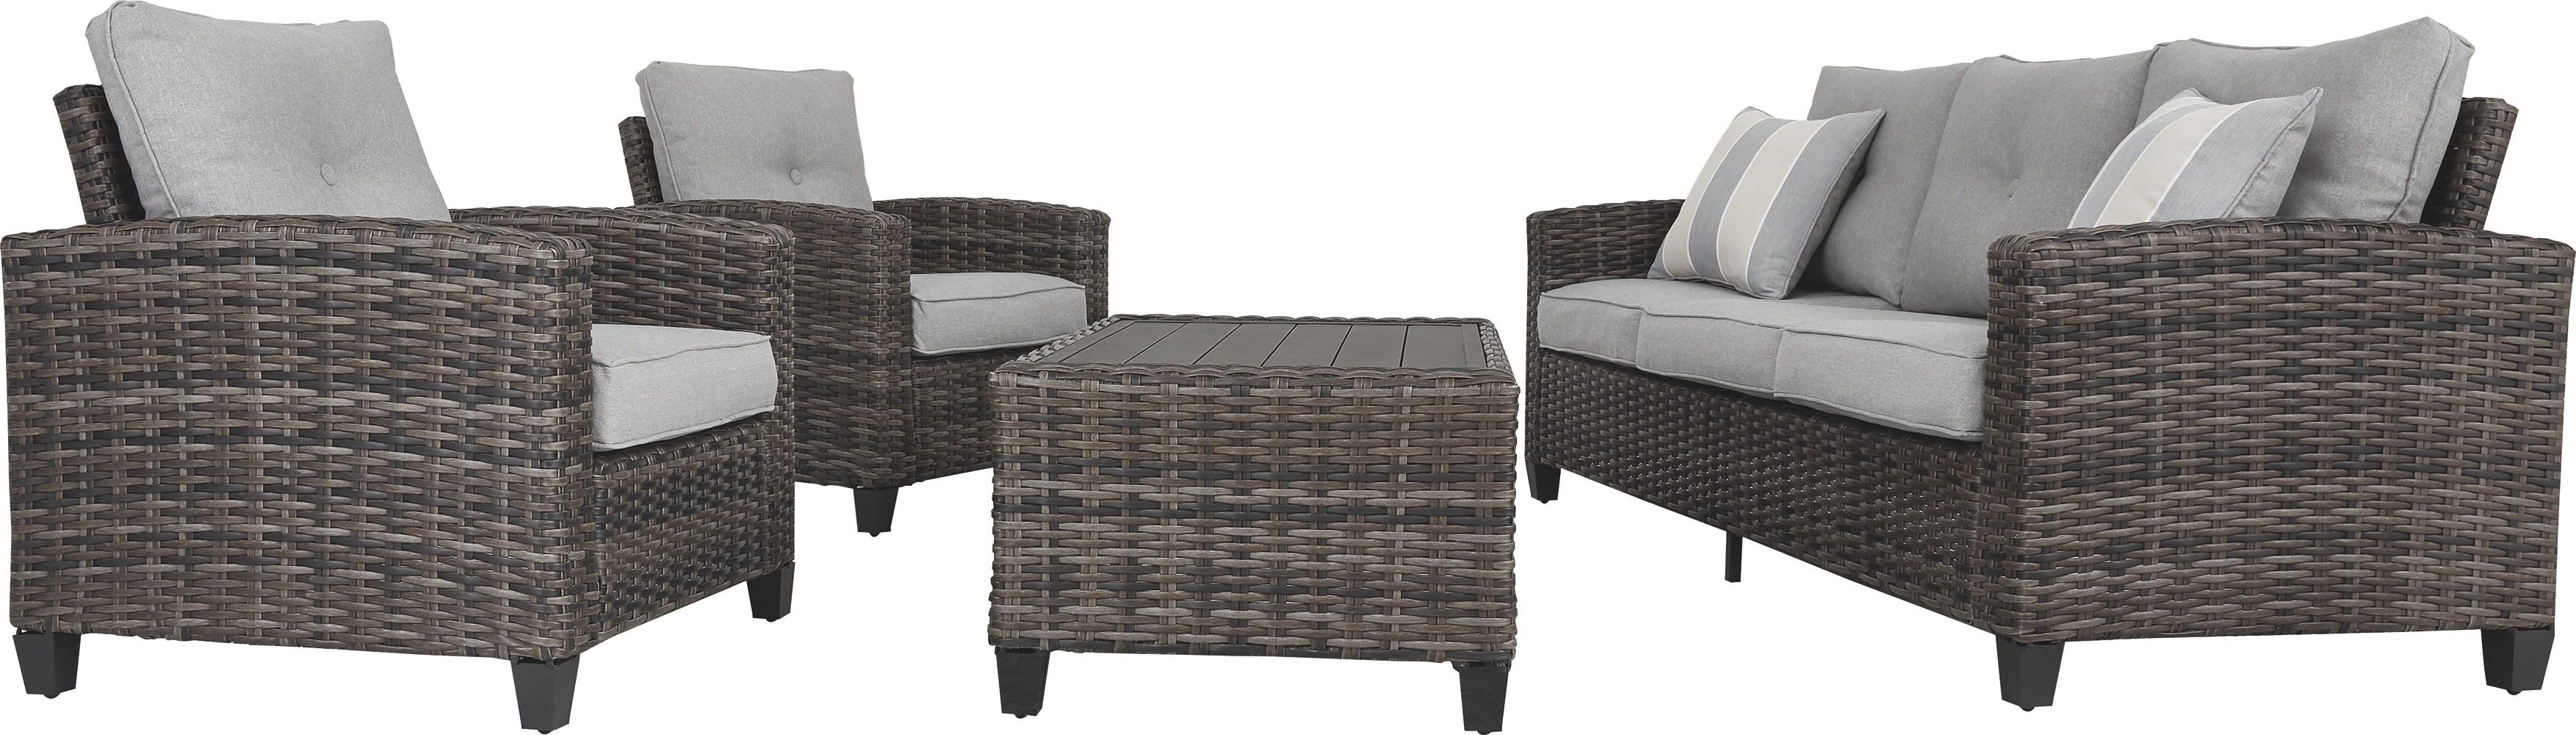 Cloverbrooke Gray 4 Piece Outdoor Conversation Set Outdoor Furniture Sets Contemporary Outdoor Sofas Furniture Spot